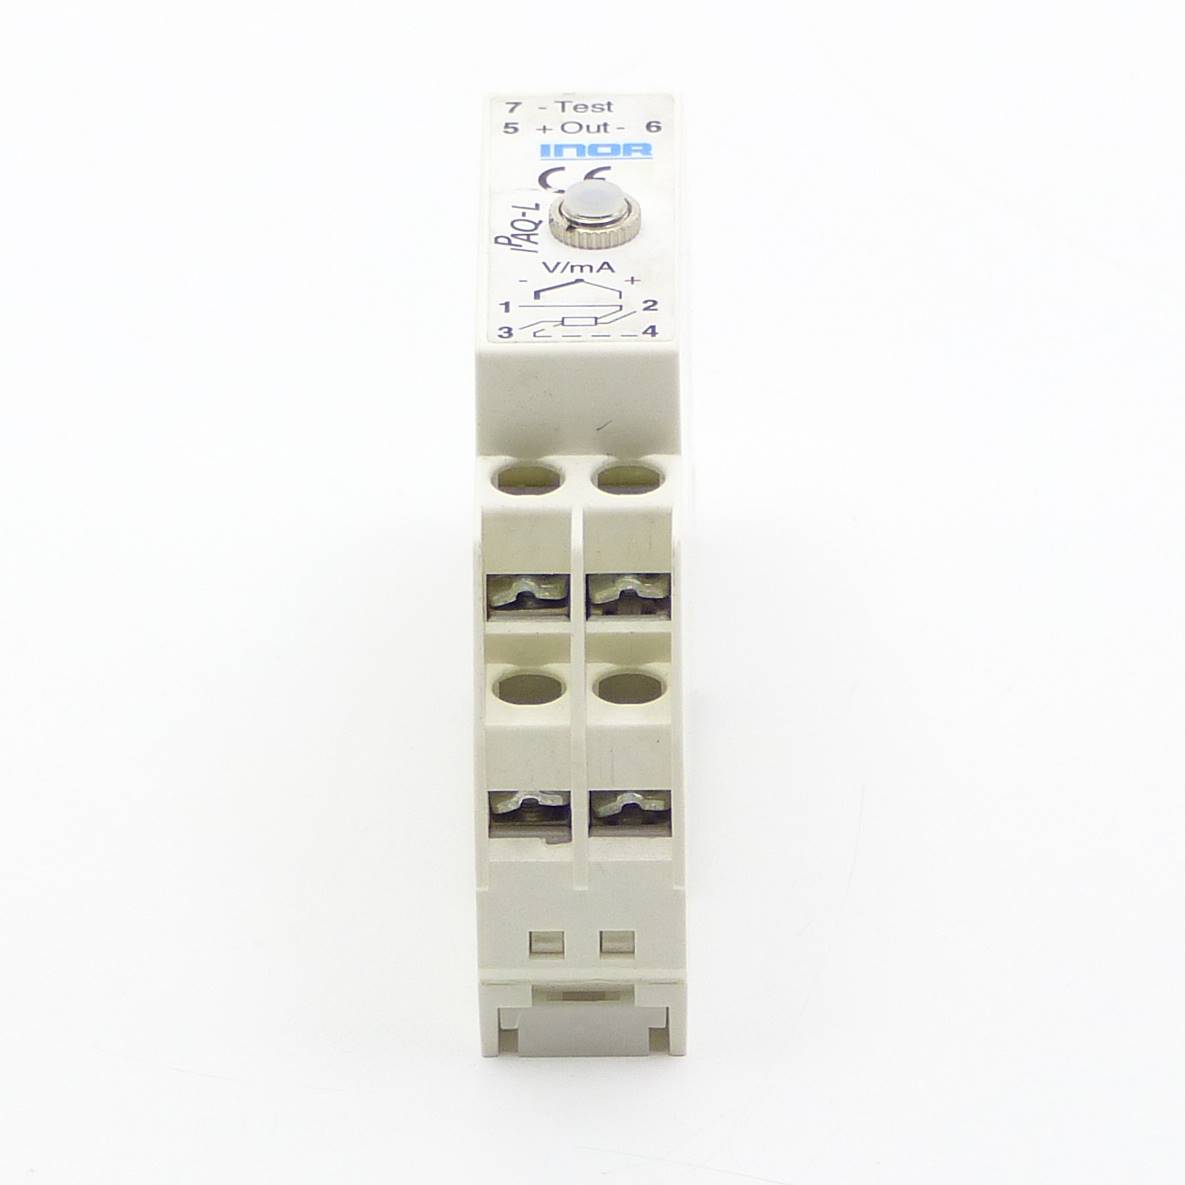 Zweidraht-Transmitter 70IPL00001-001 